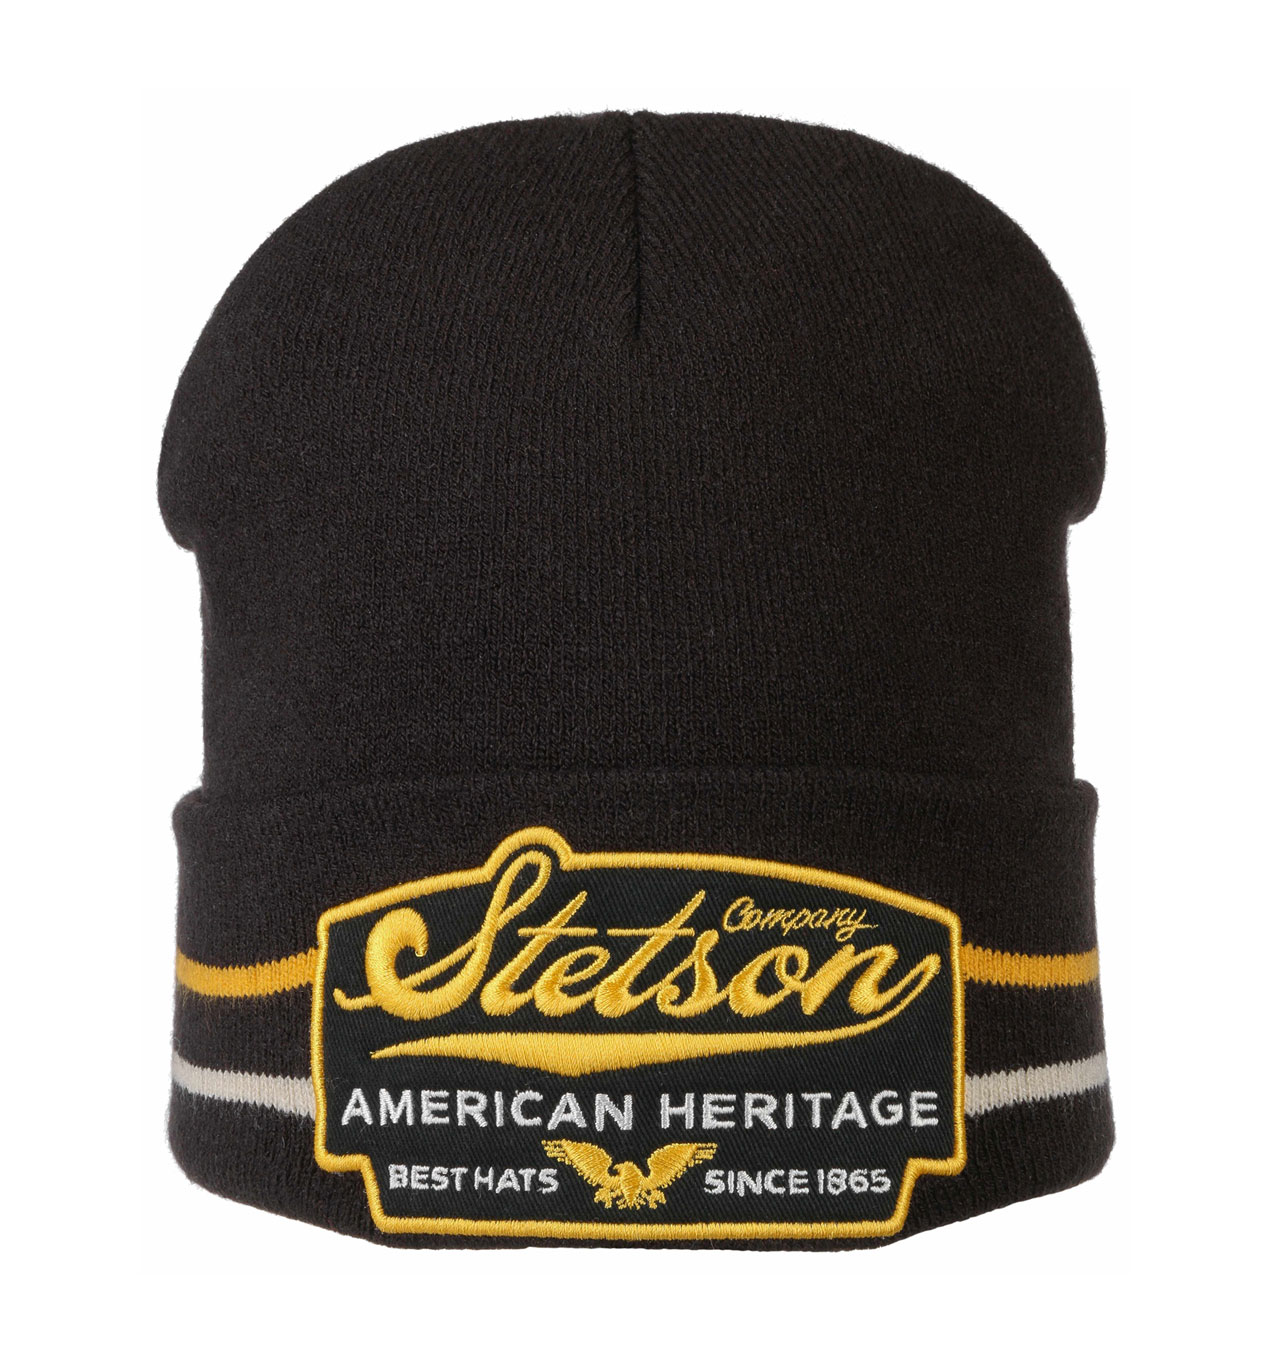 Stetson - American Heritage Beanie - Black